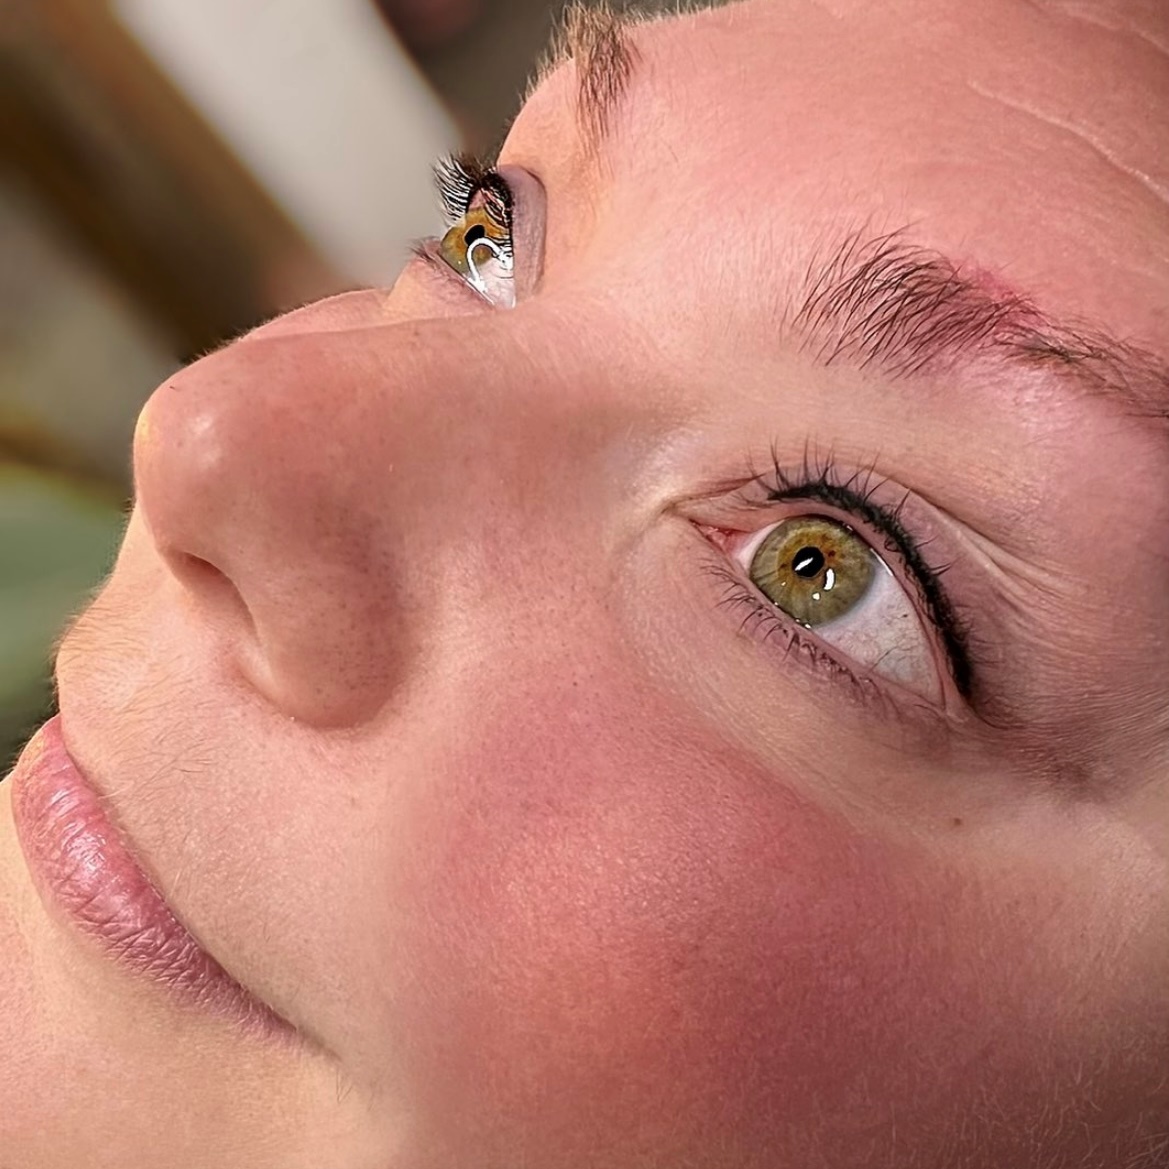 Semi-permanent eyeliner at Vybe Beauty